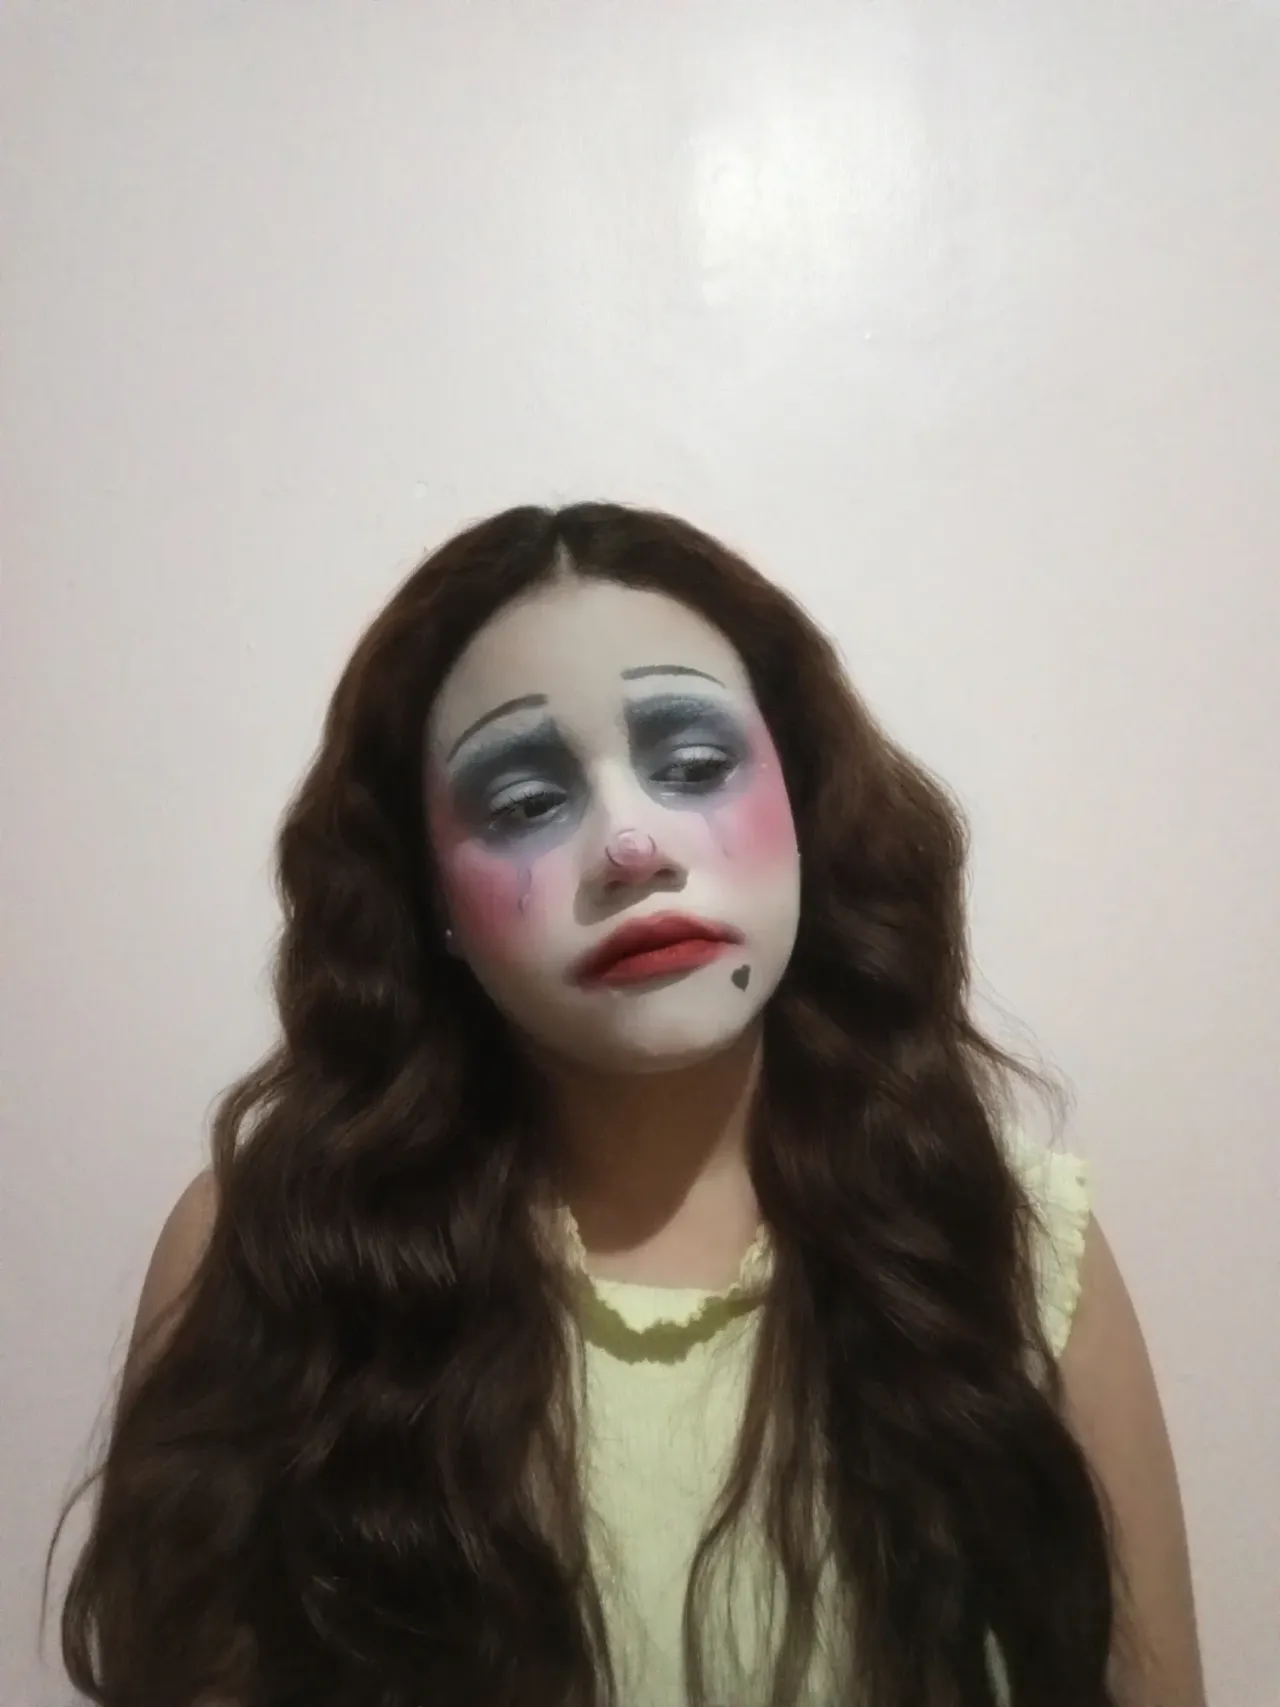 [ENG - SPA] 🤡🎈Maquillaje de payaso triste | Sad Clown Makeup 🤡🎈